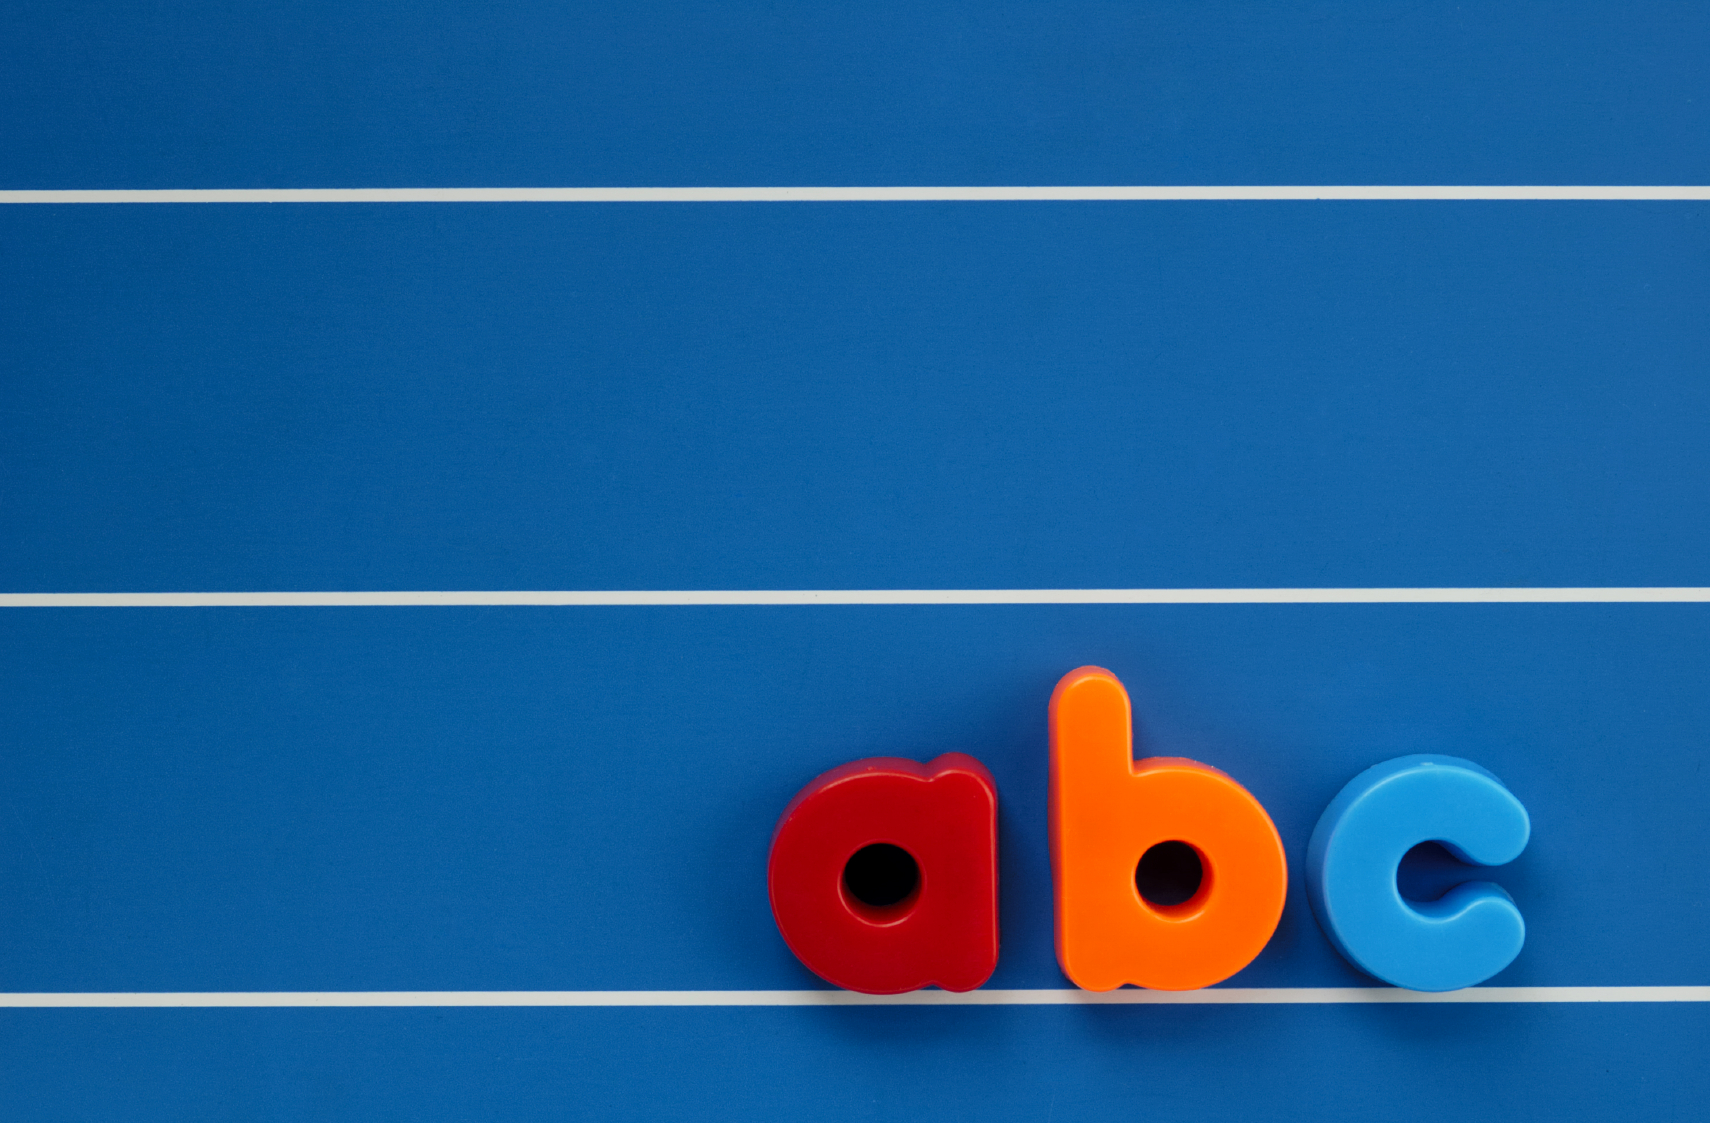 The ABCs of Organization